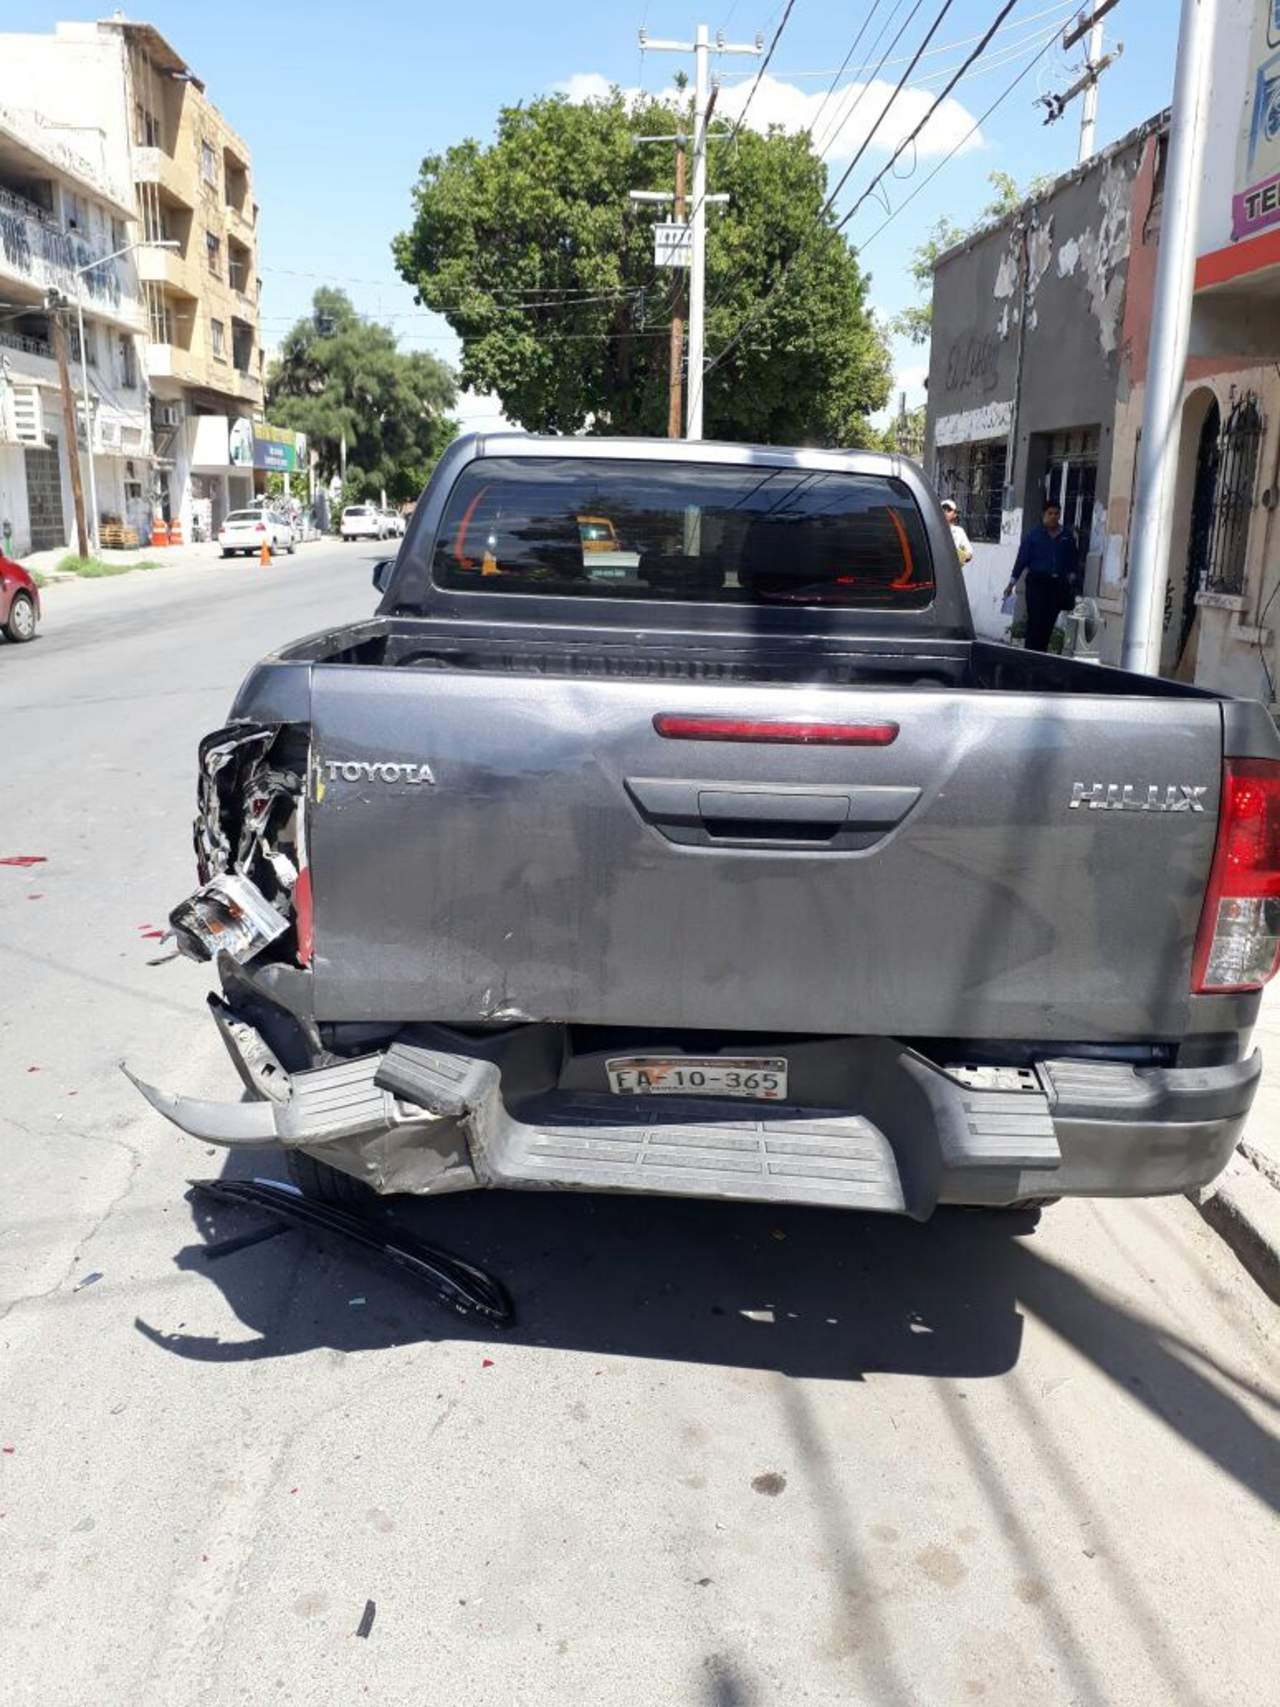 Conductora chihuahuense provoca accidente múltiple en la zona centro de Torreón